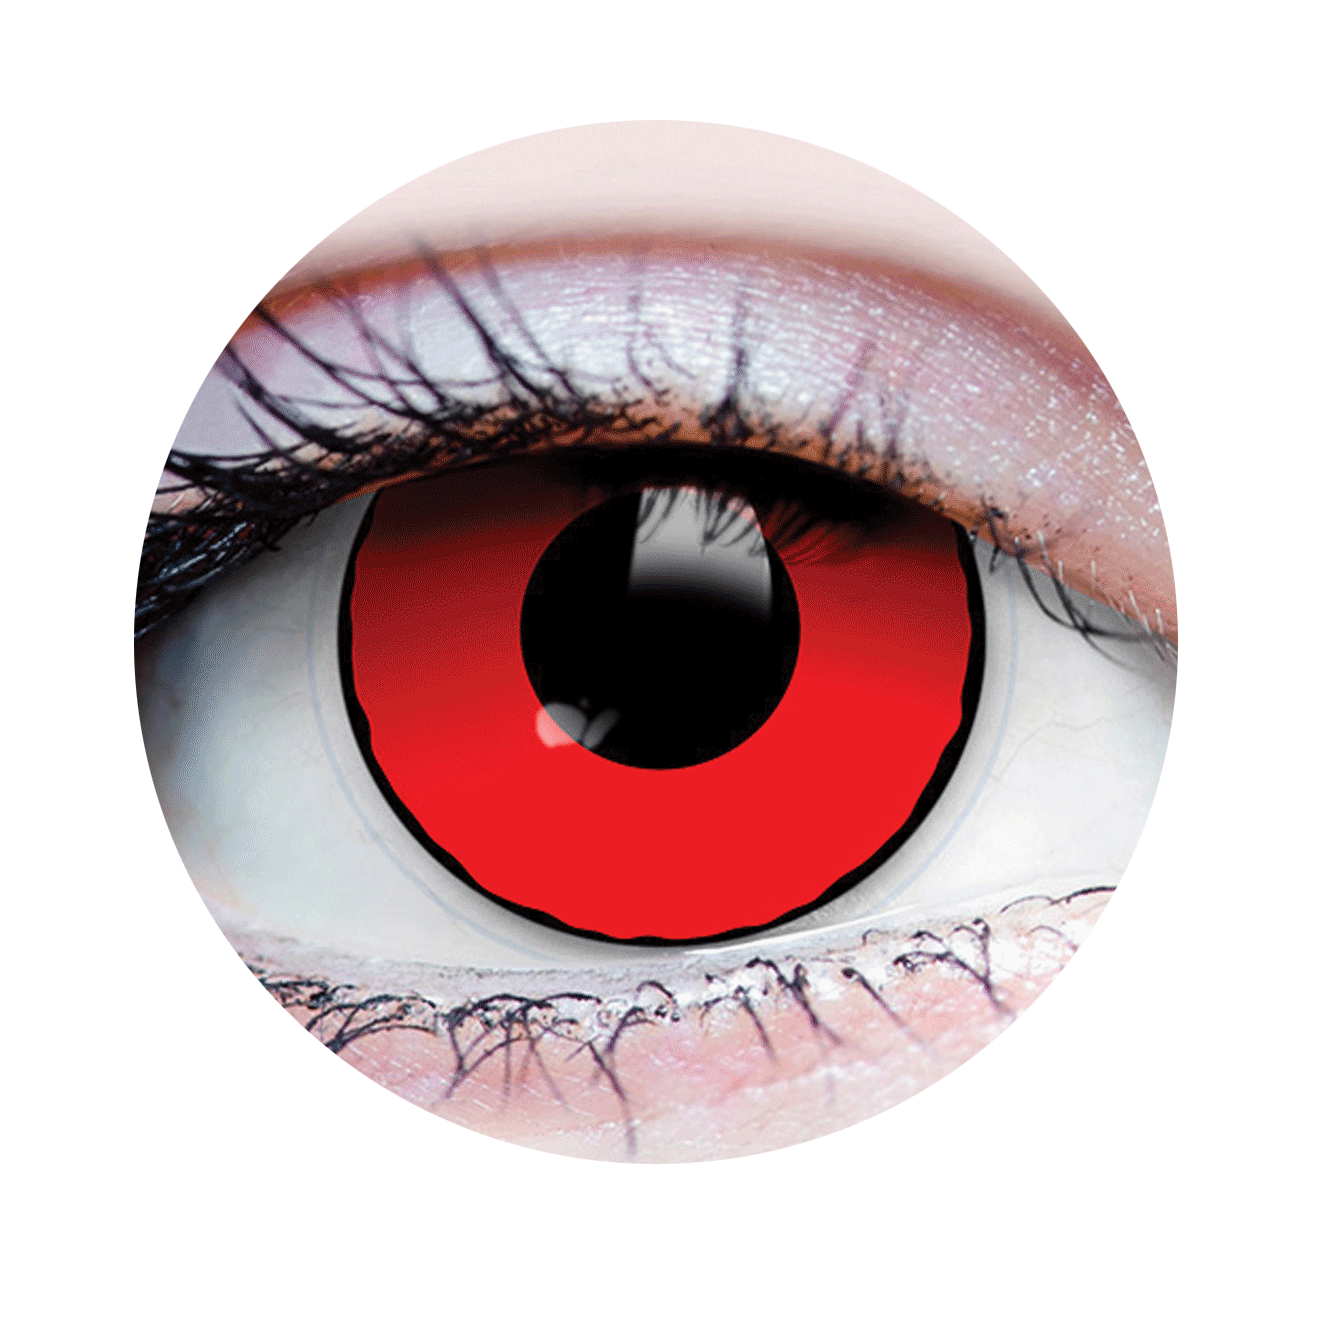 Lentilles de contact-Blood eye